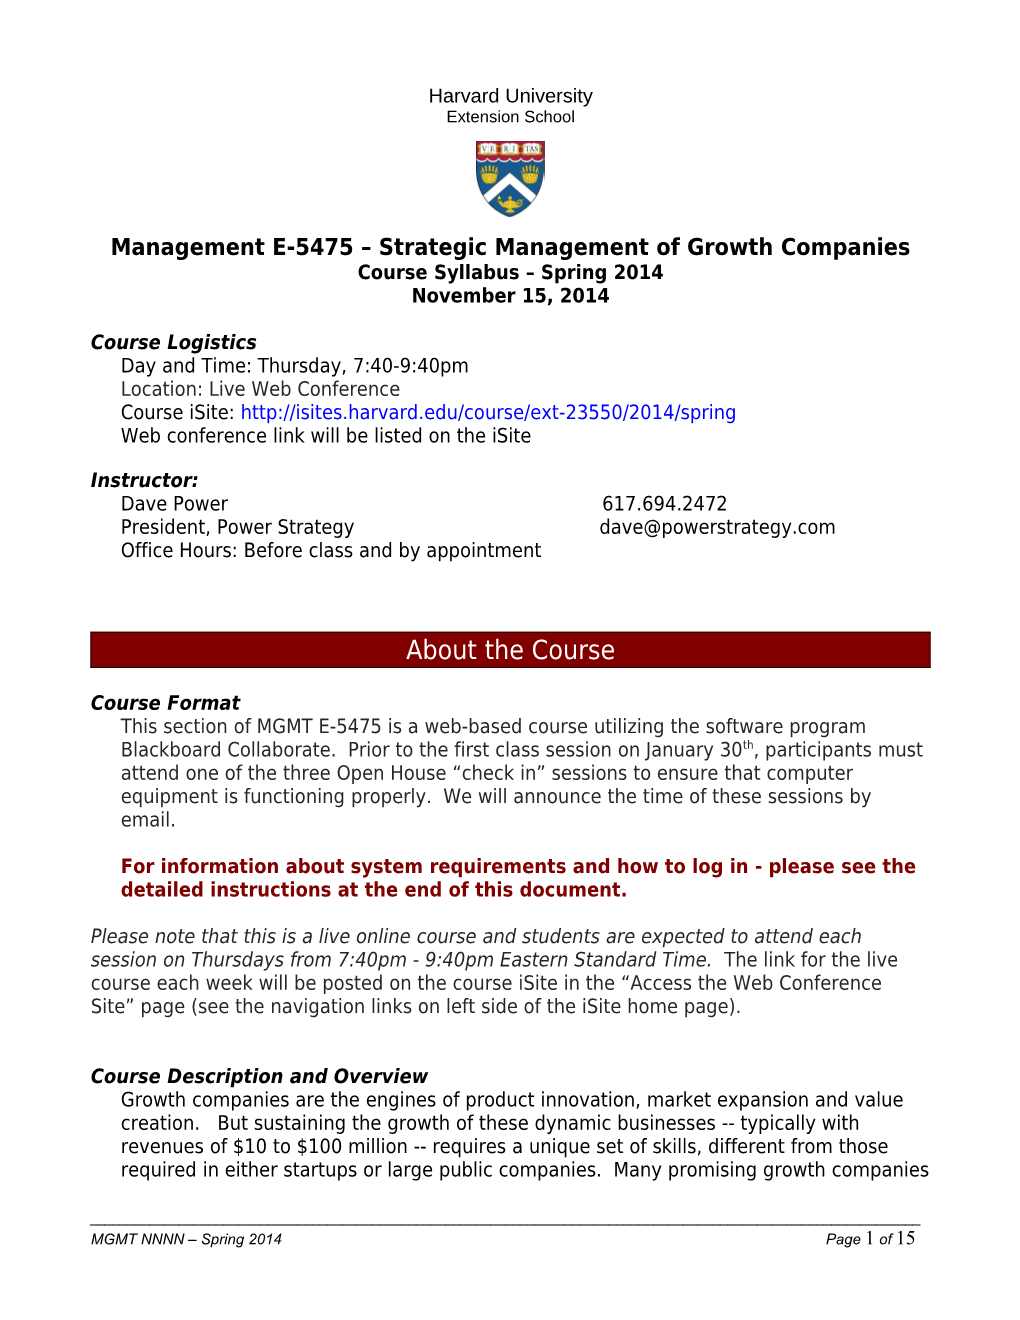 Management E-5475 Strategic Management of Growth Companies